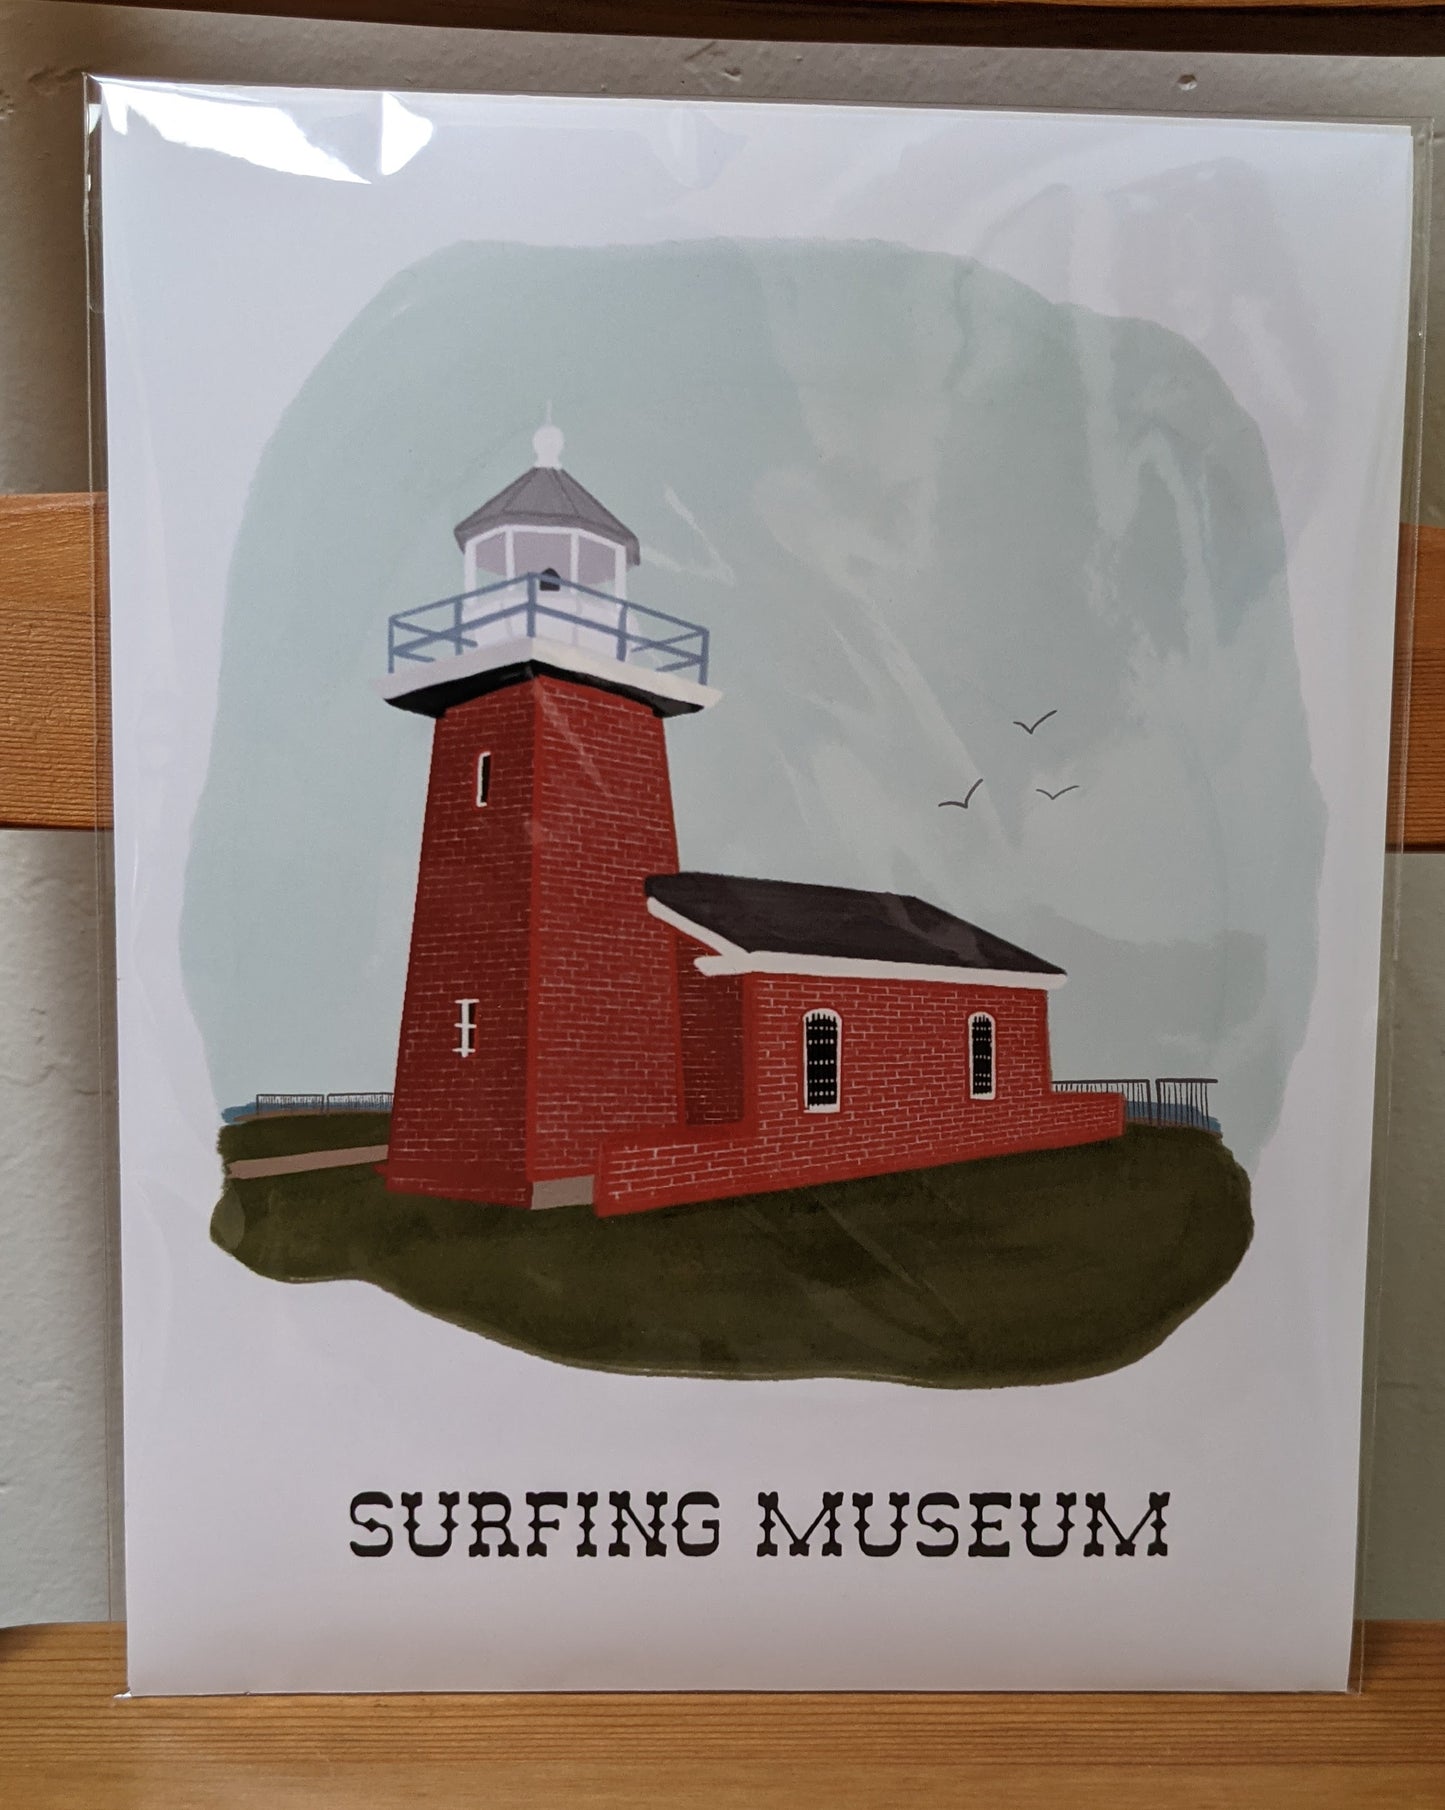 Surfing Museum illustrated print by Pau Hana Designs